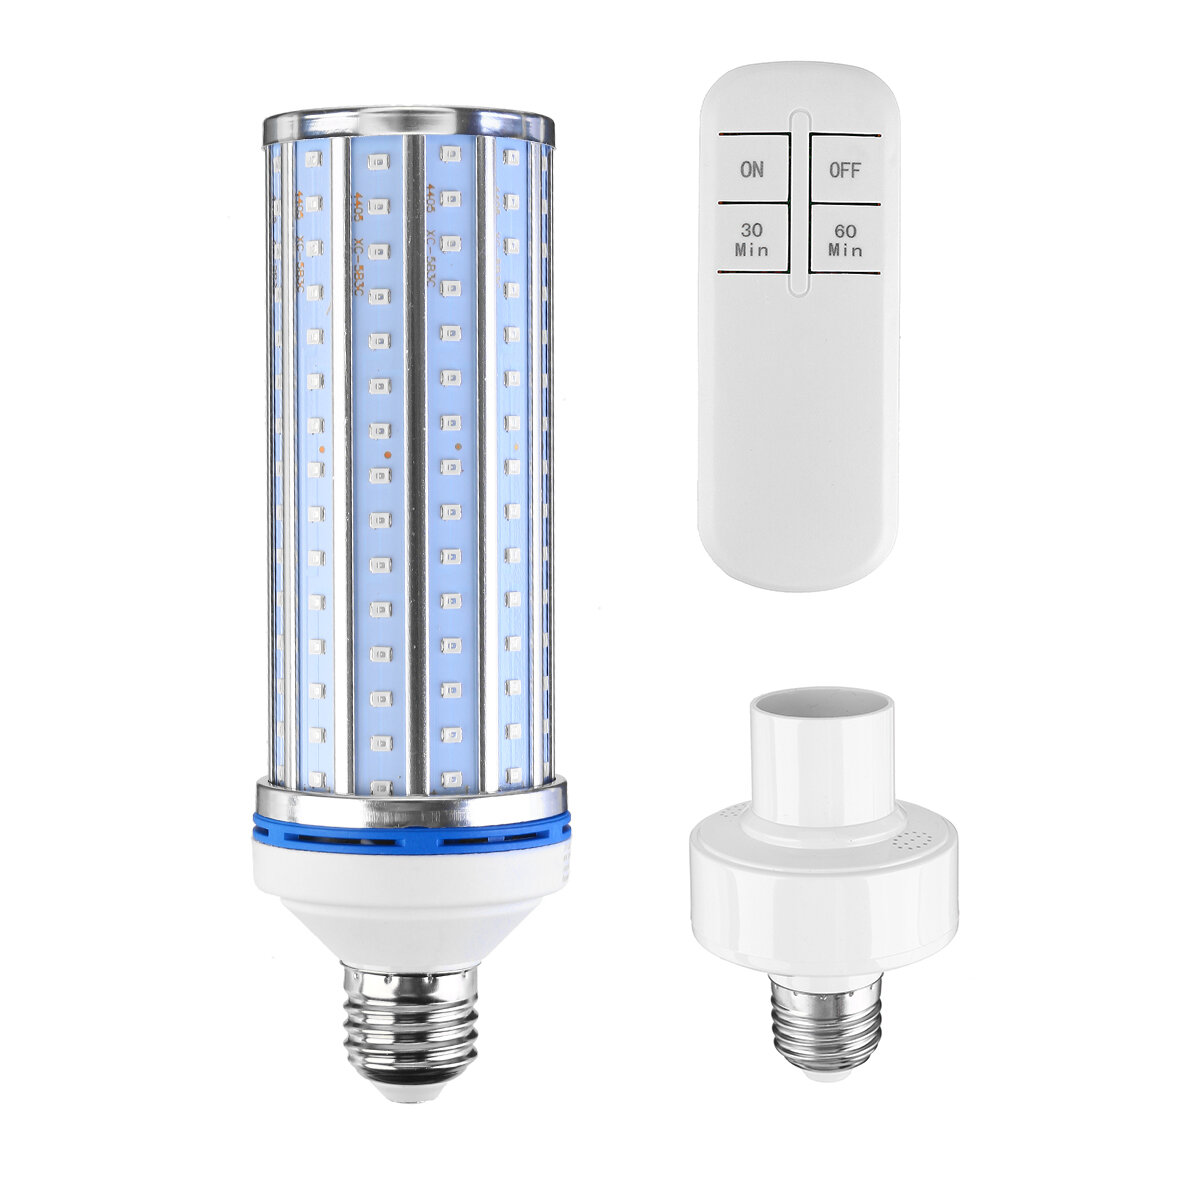 60W 110V/220V UV Germicidal LED Light Bulb 30Min/60Min Timing Disinfection Sterilizer Lamp With Remote Control